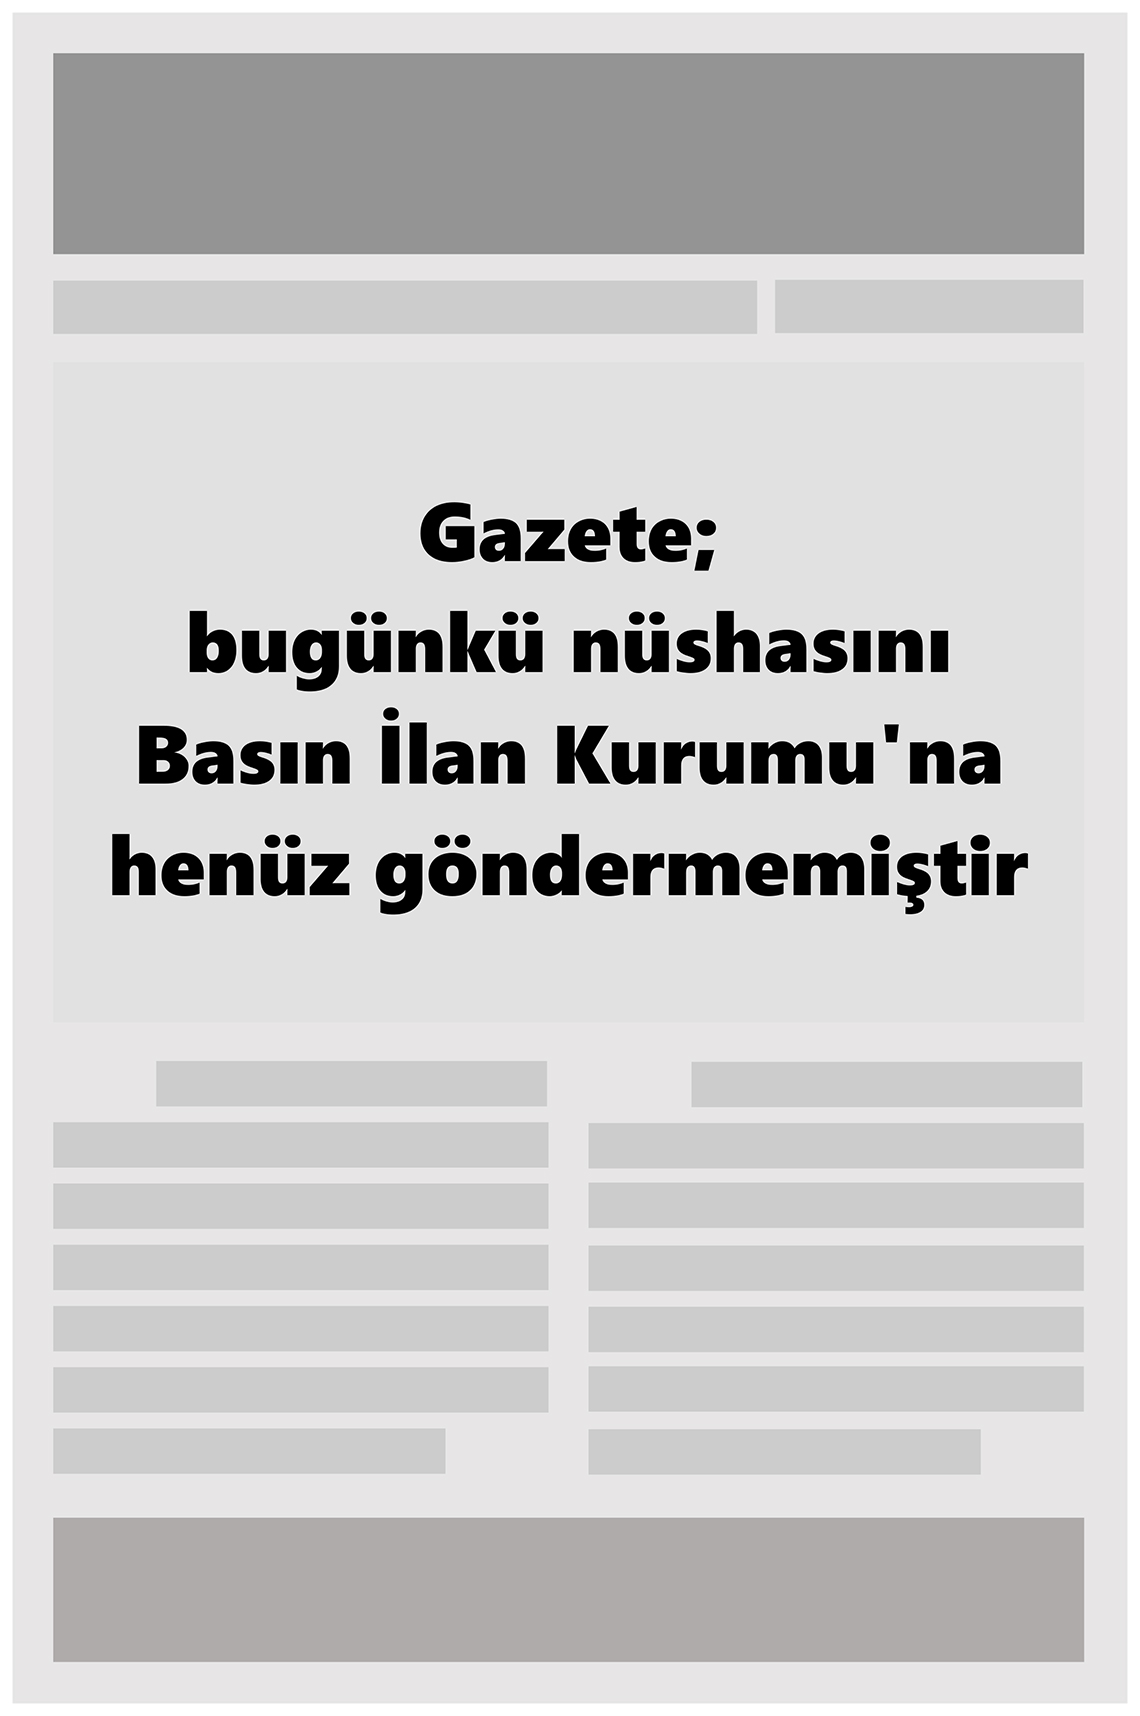 05 Şubat 2023 Gazete 3 Gazete Manşeti